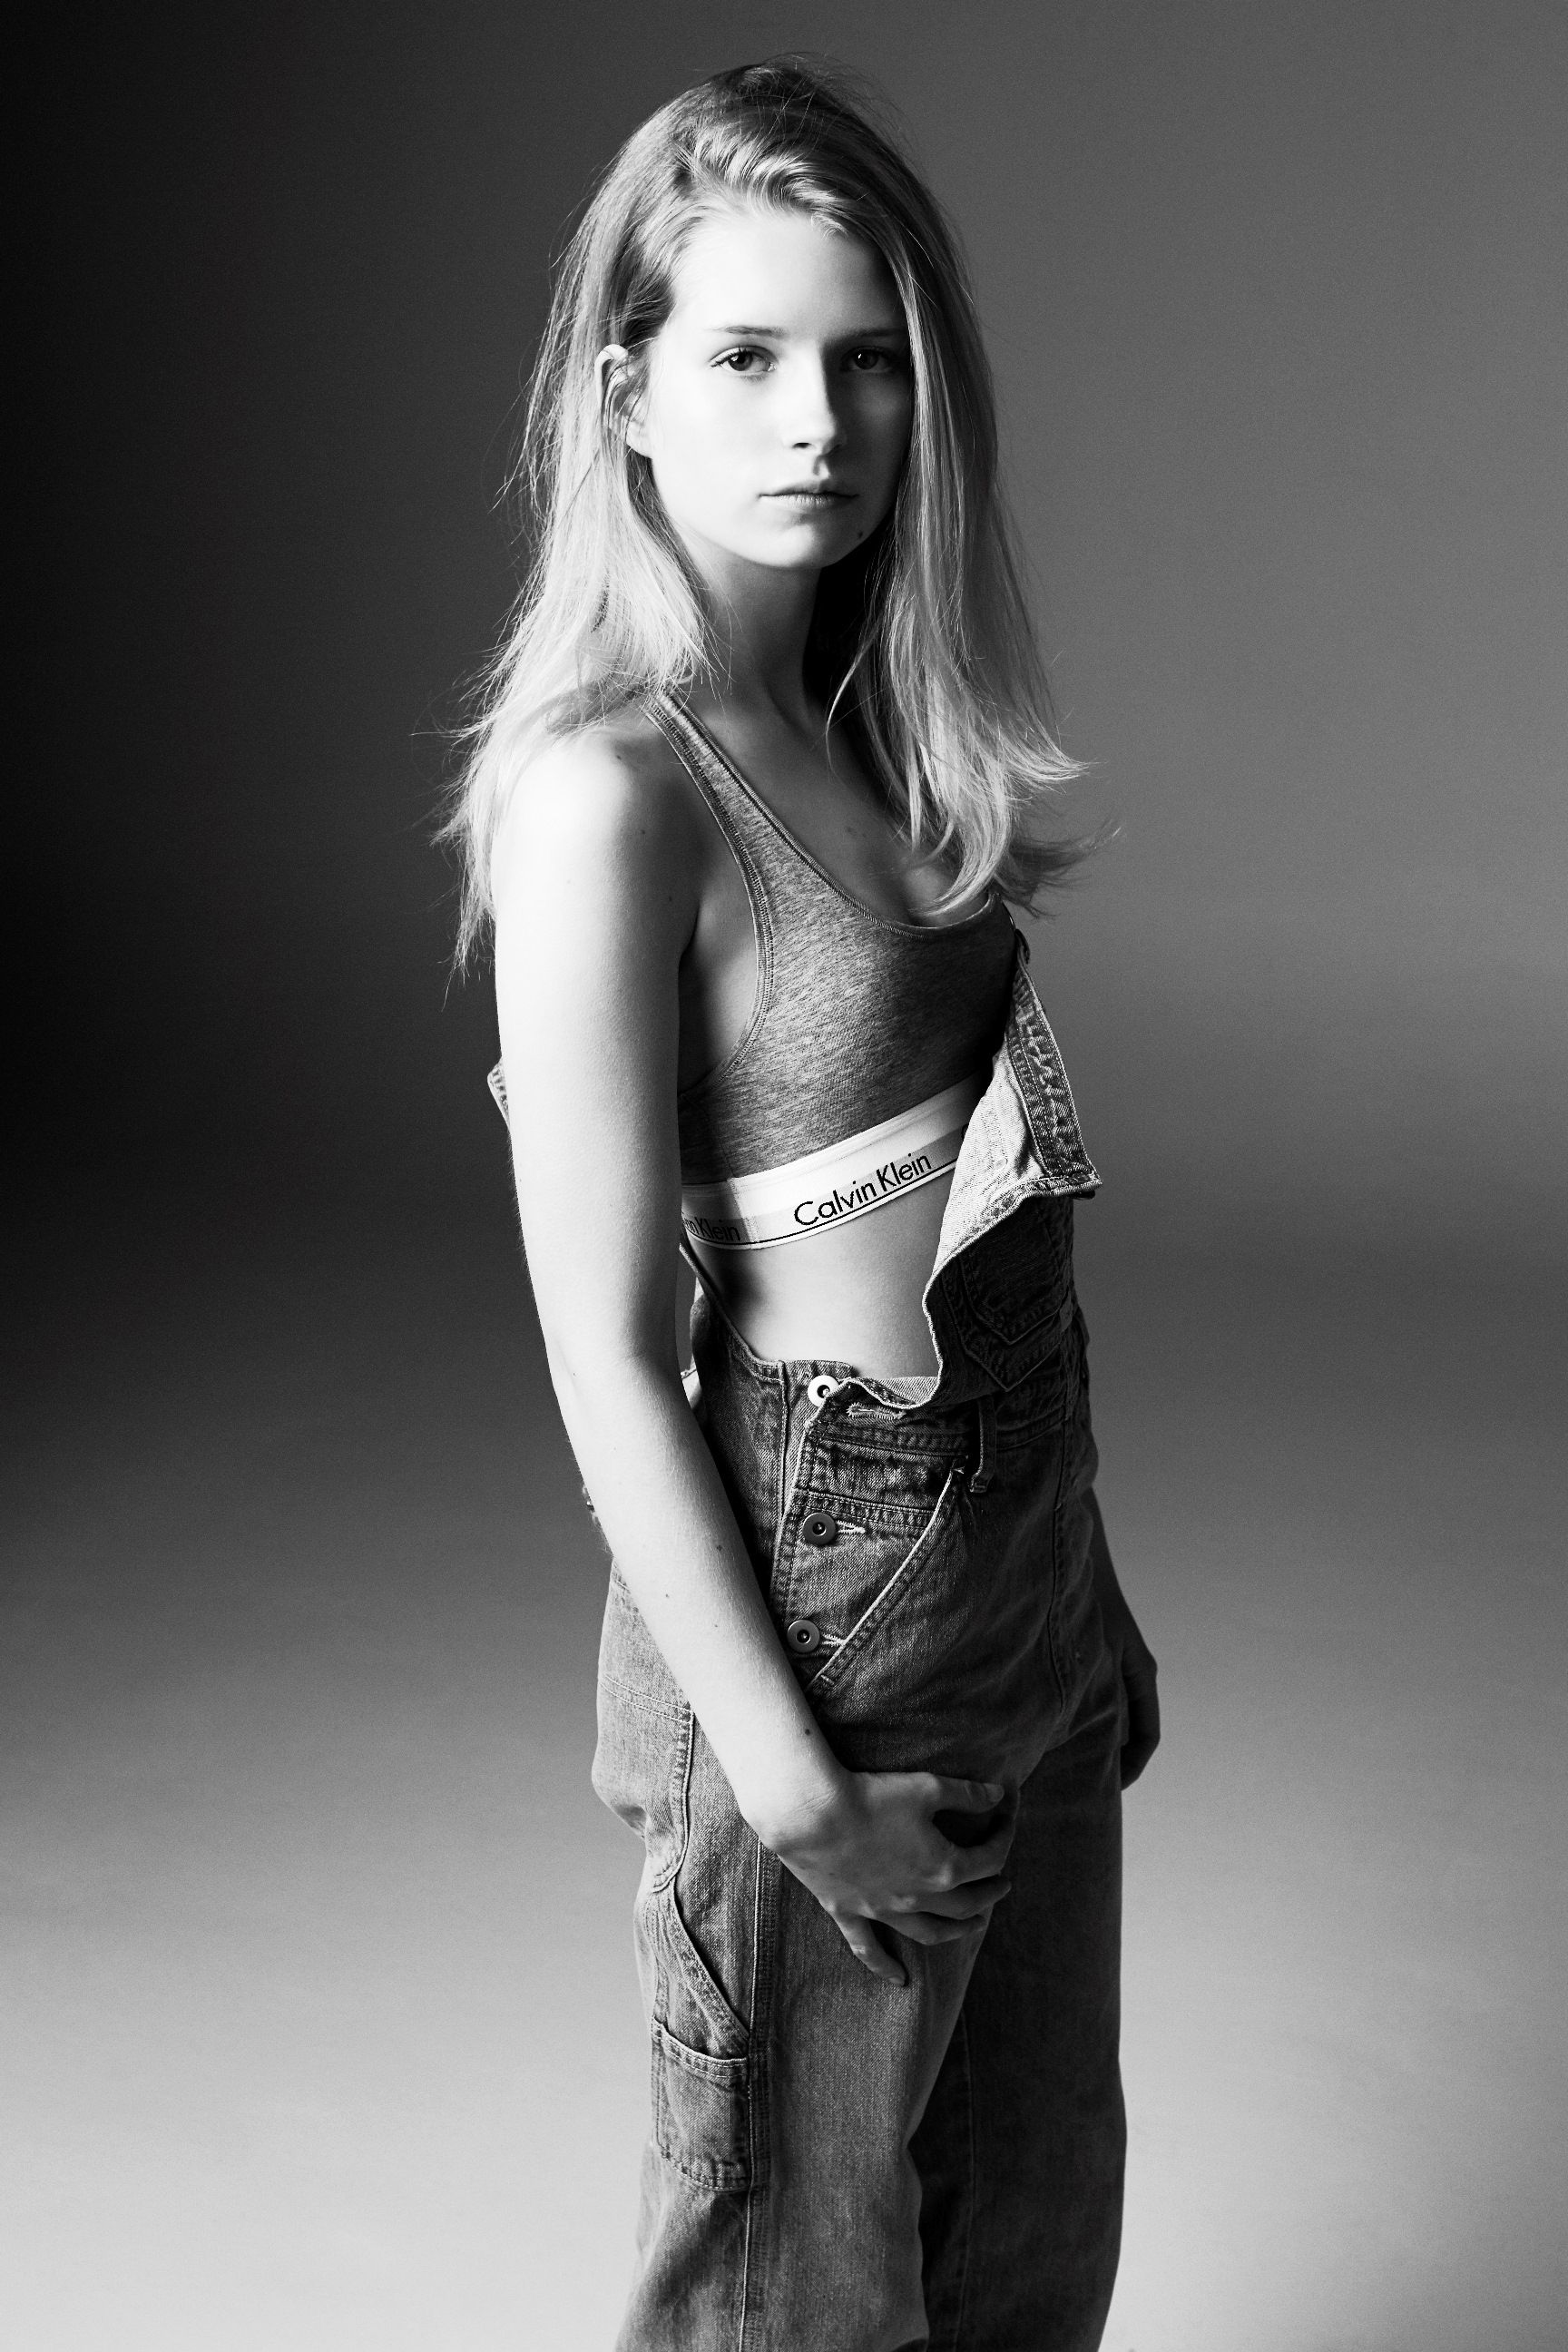 Kate Moss' little sister lands a Calvin Klein campaign